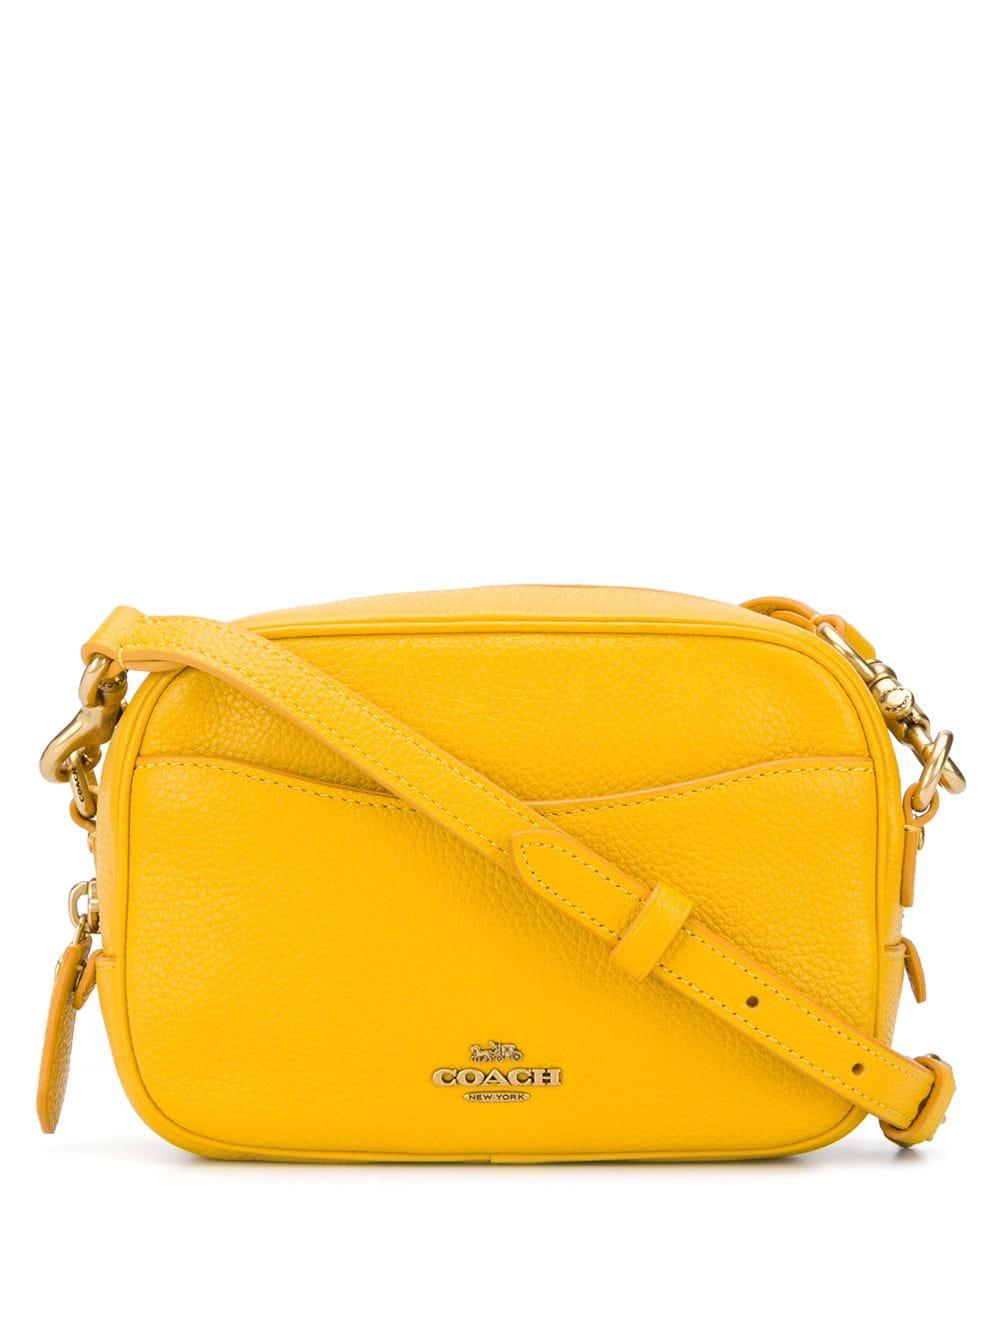 Aprender acerca 33+ imagen yellow coach handbag